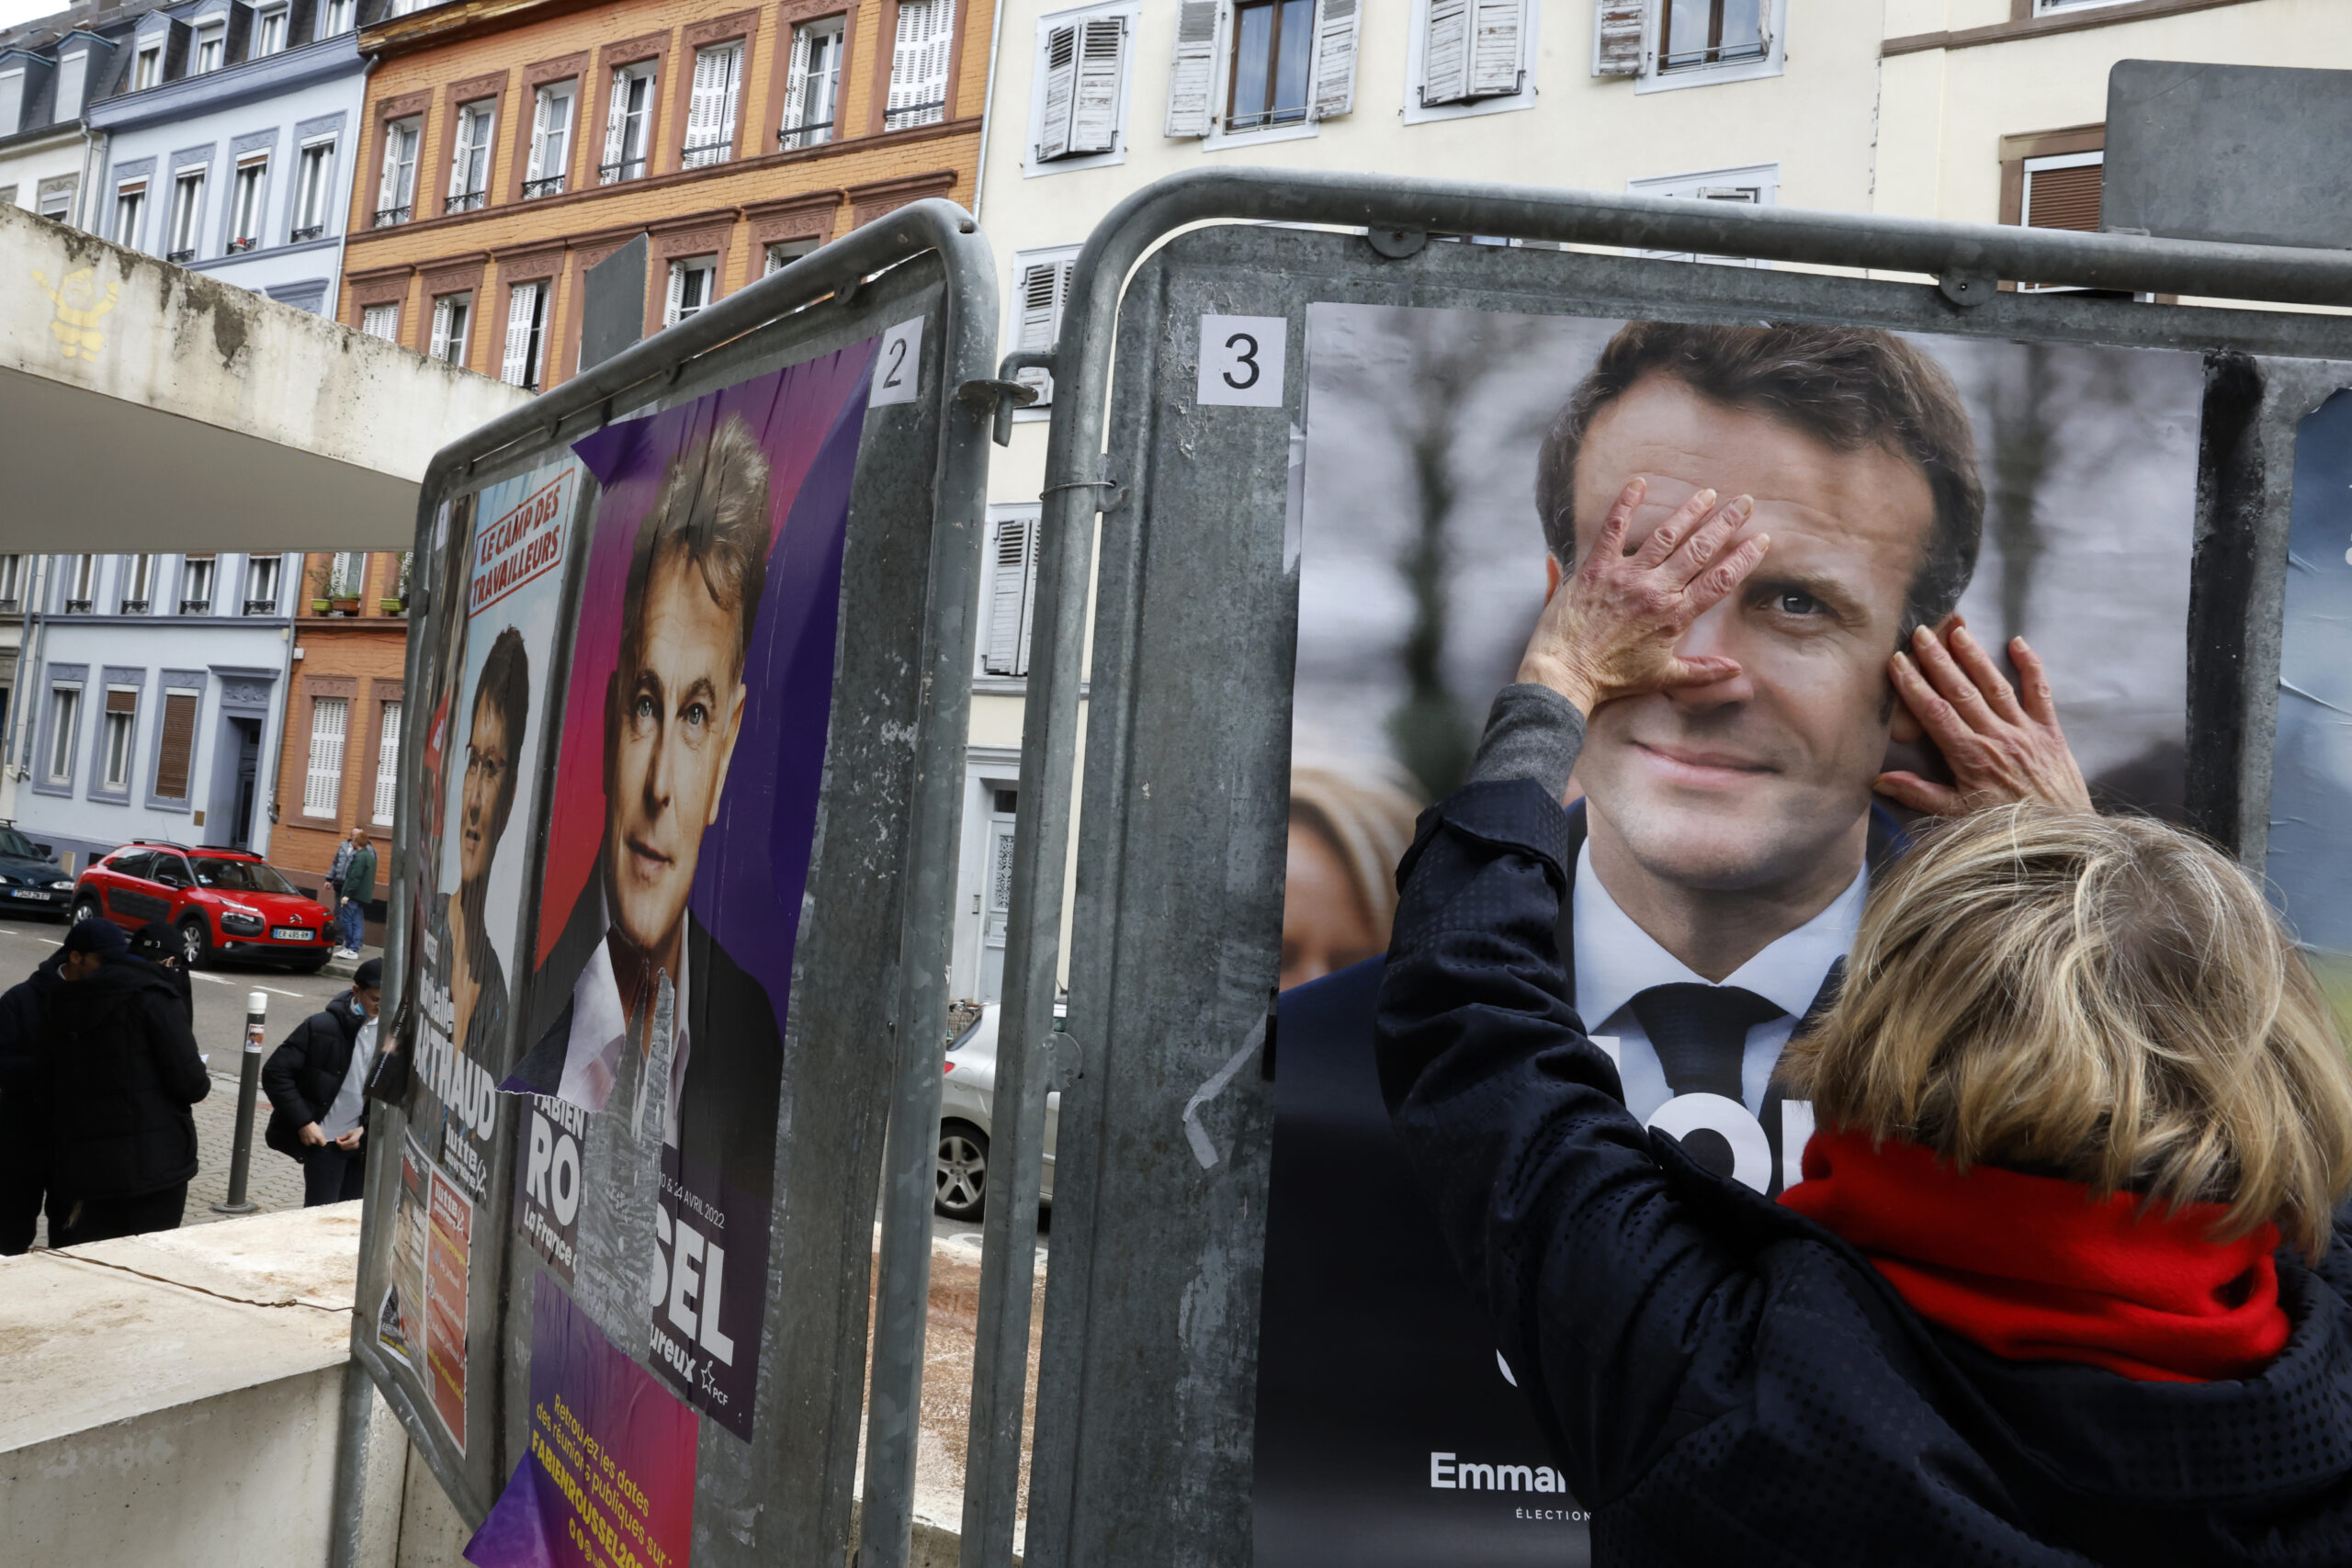 Presidenziali Francia, al ballottaggio tra Macron e Le Pen